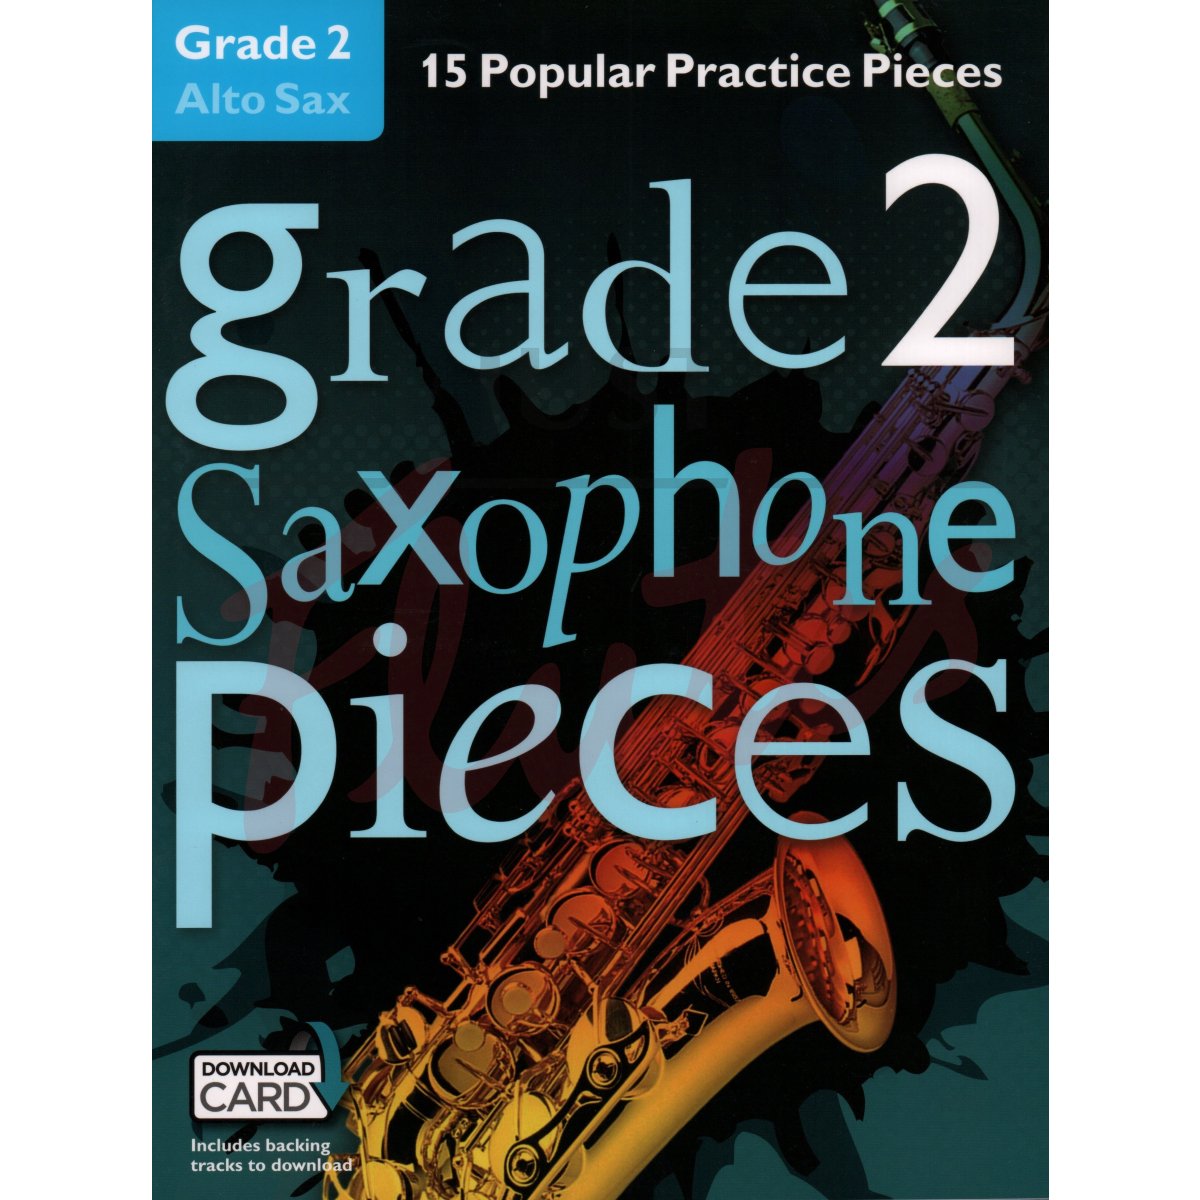 Grade 2 Saxophone Pieces - 15 Popular Practice Pieces for Alto Saxophone